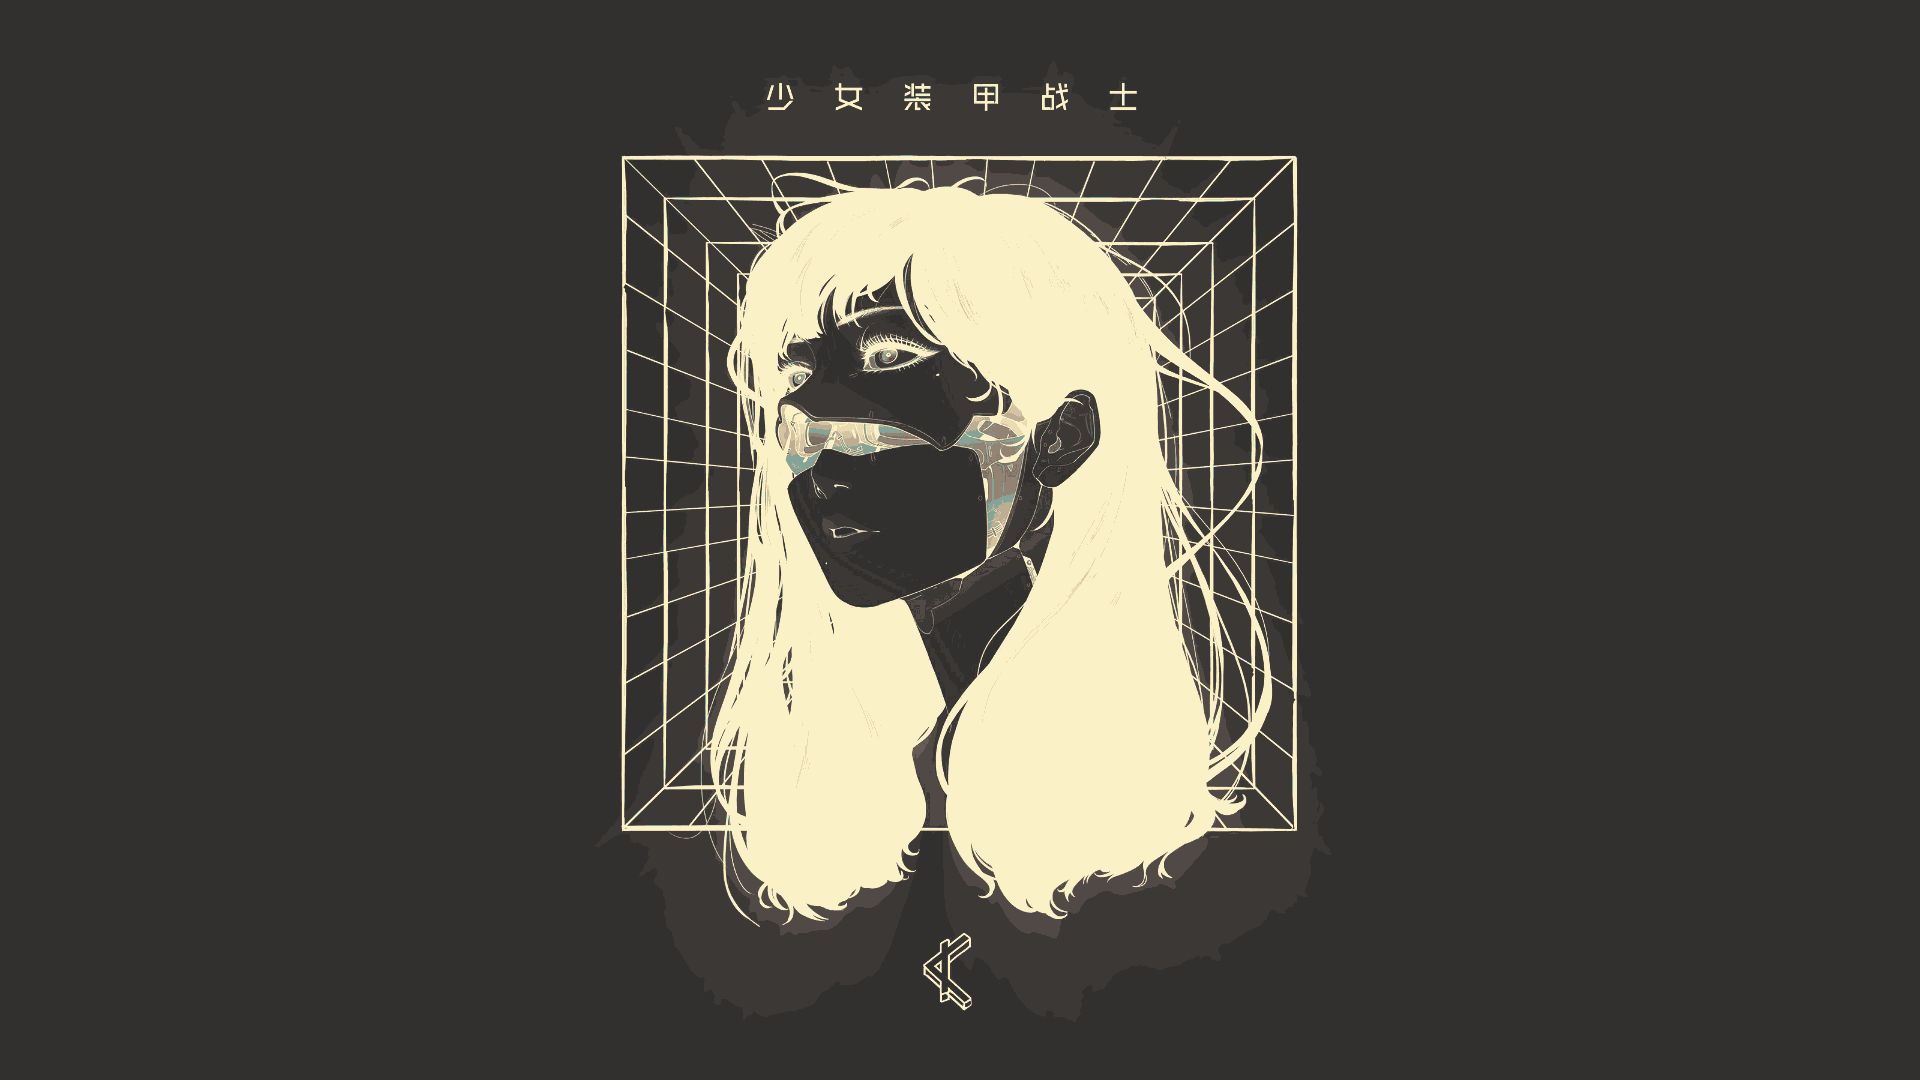 General 1920x1080 gruvbox minimalism cyber simple background long hair women kanji